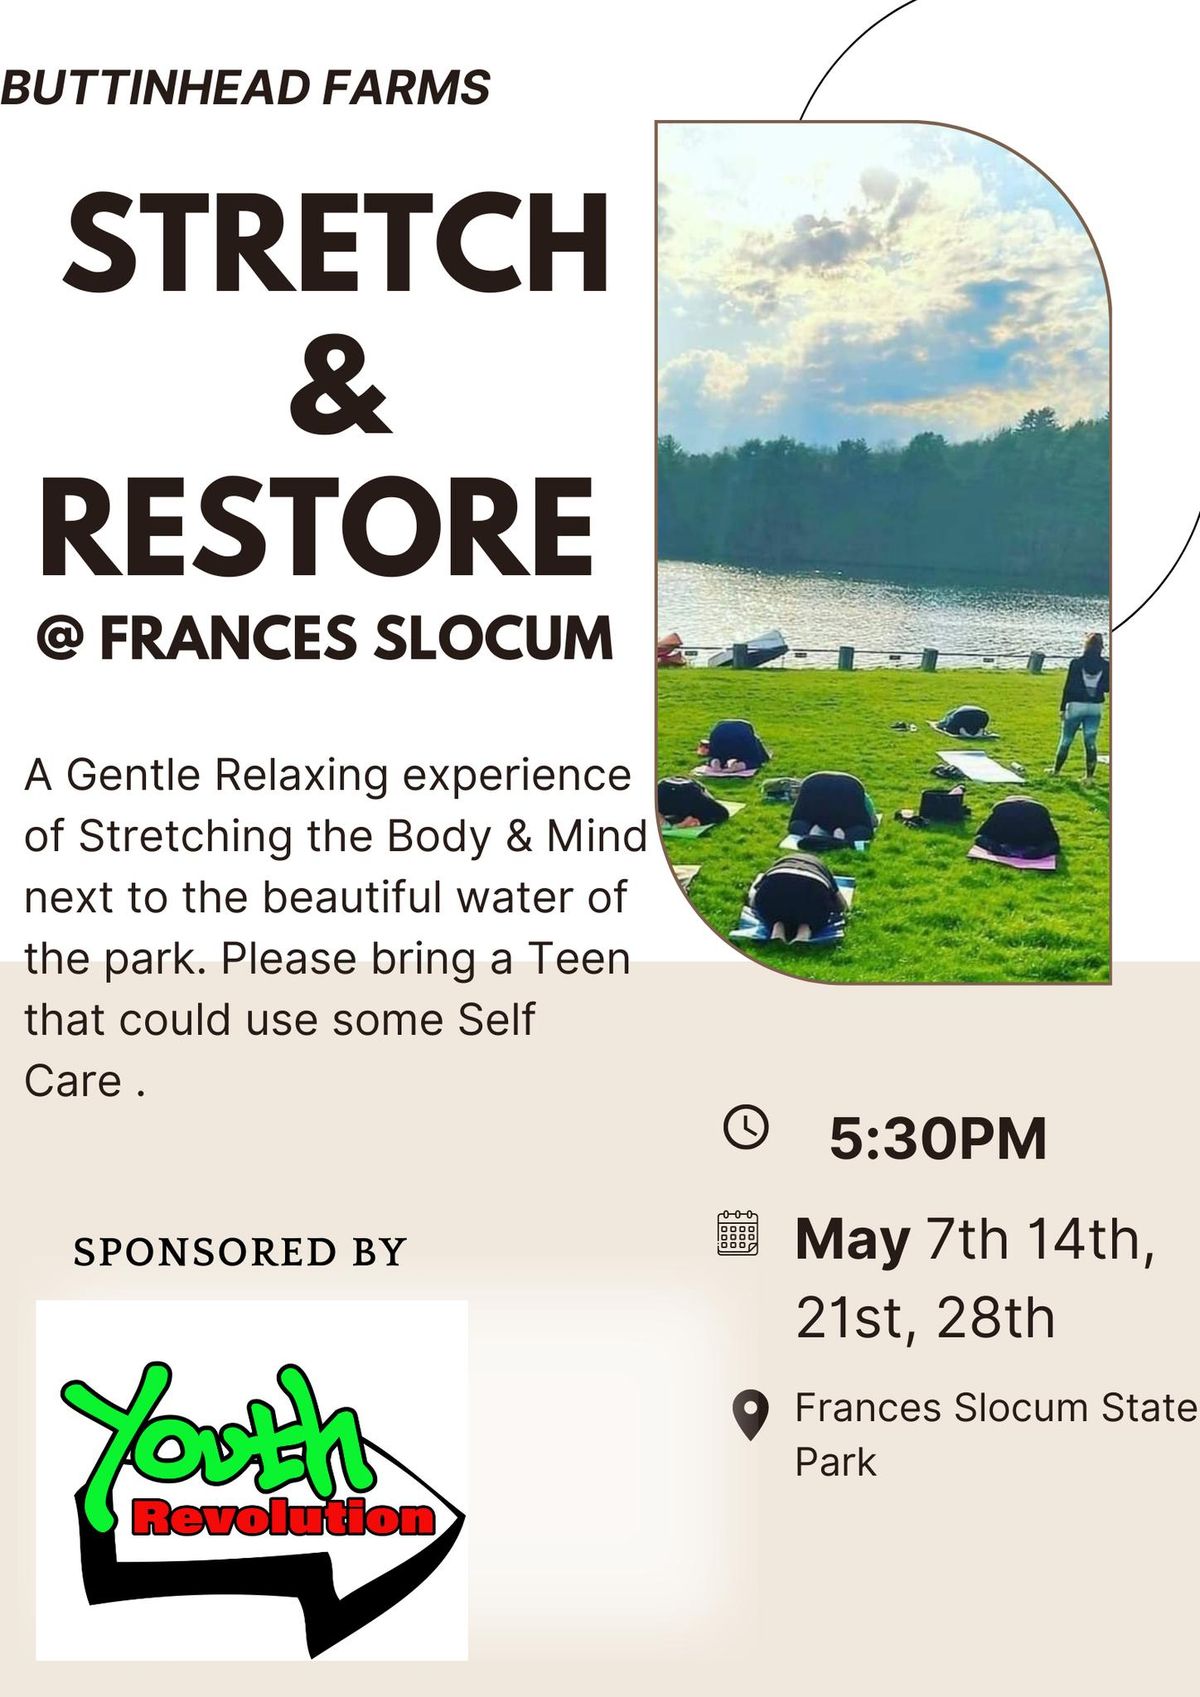 Community Stretch & Restore Sponsored by Youth Revolution 